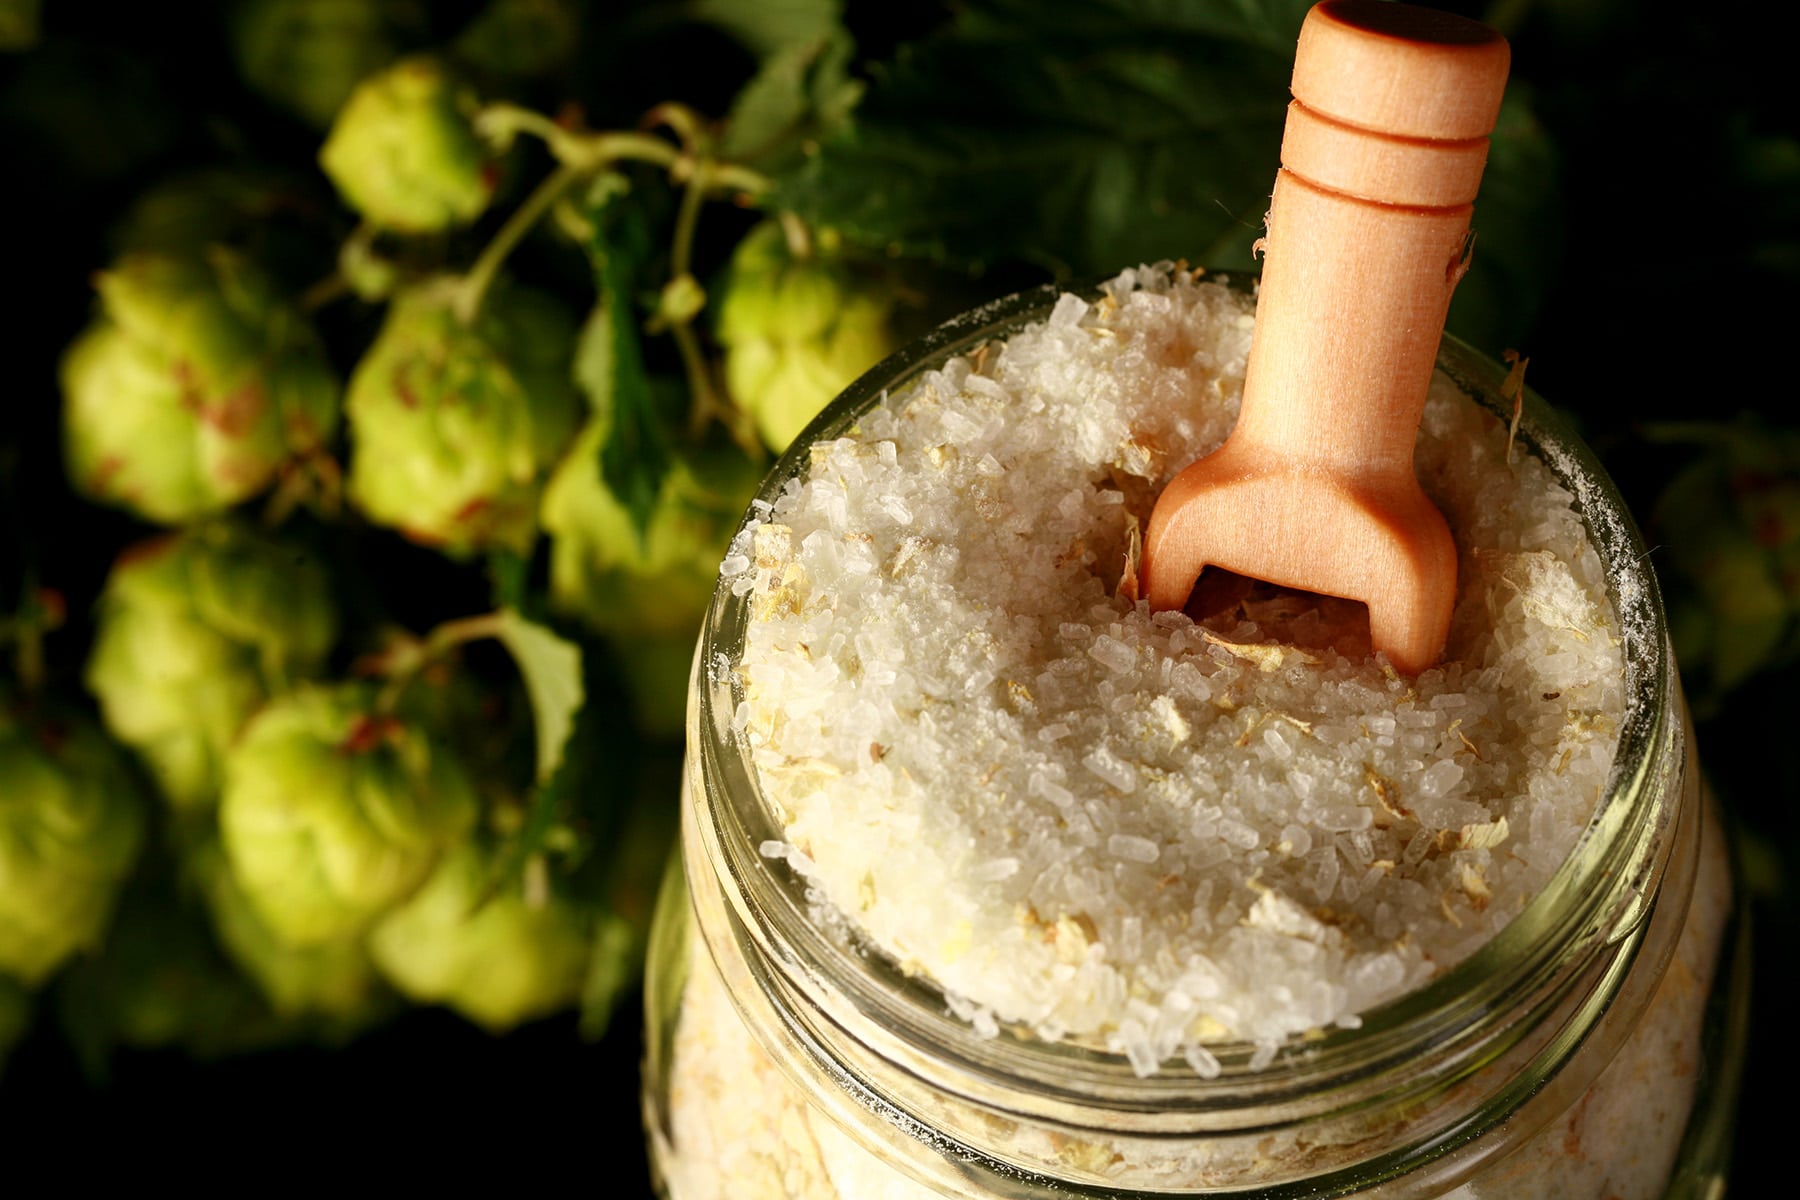 A close up view of a jar of hopped bath salt.